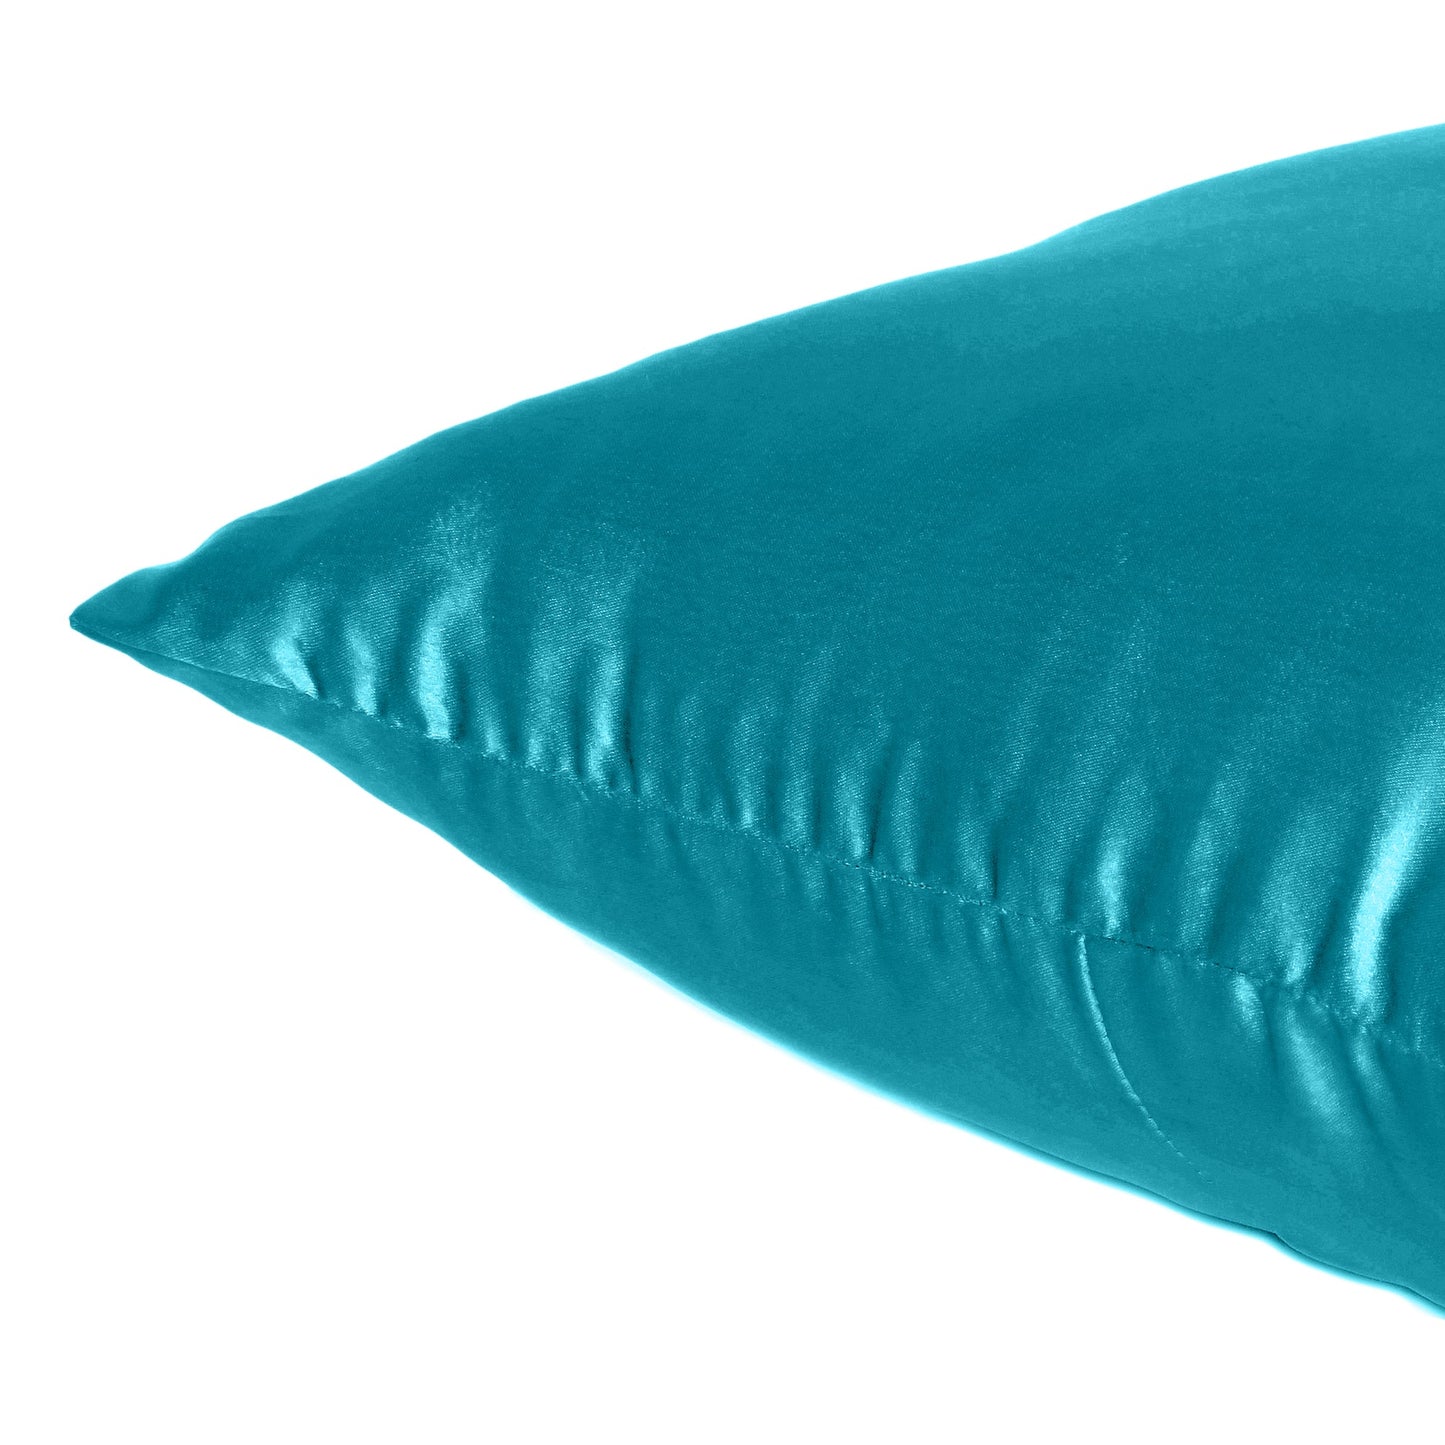 Corsair Blue Satin Silky Cushion Covers in Set of 2